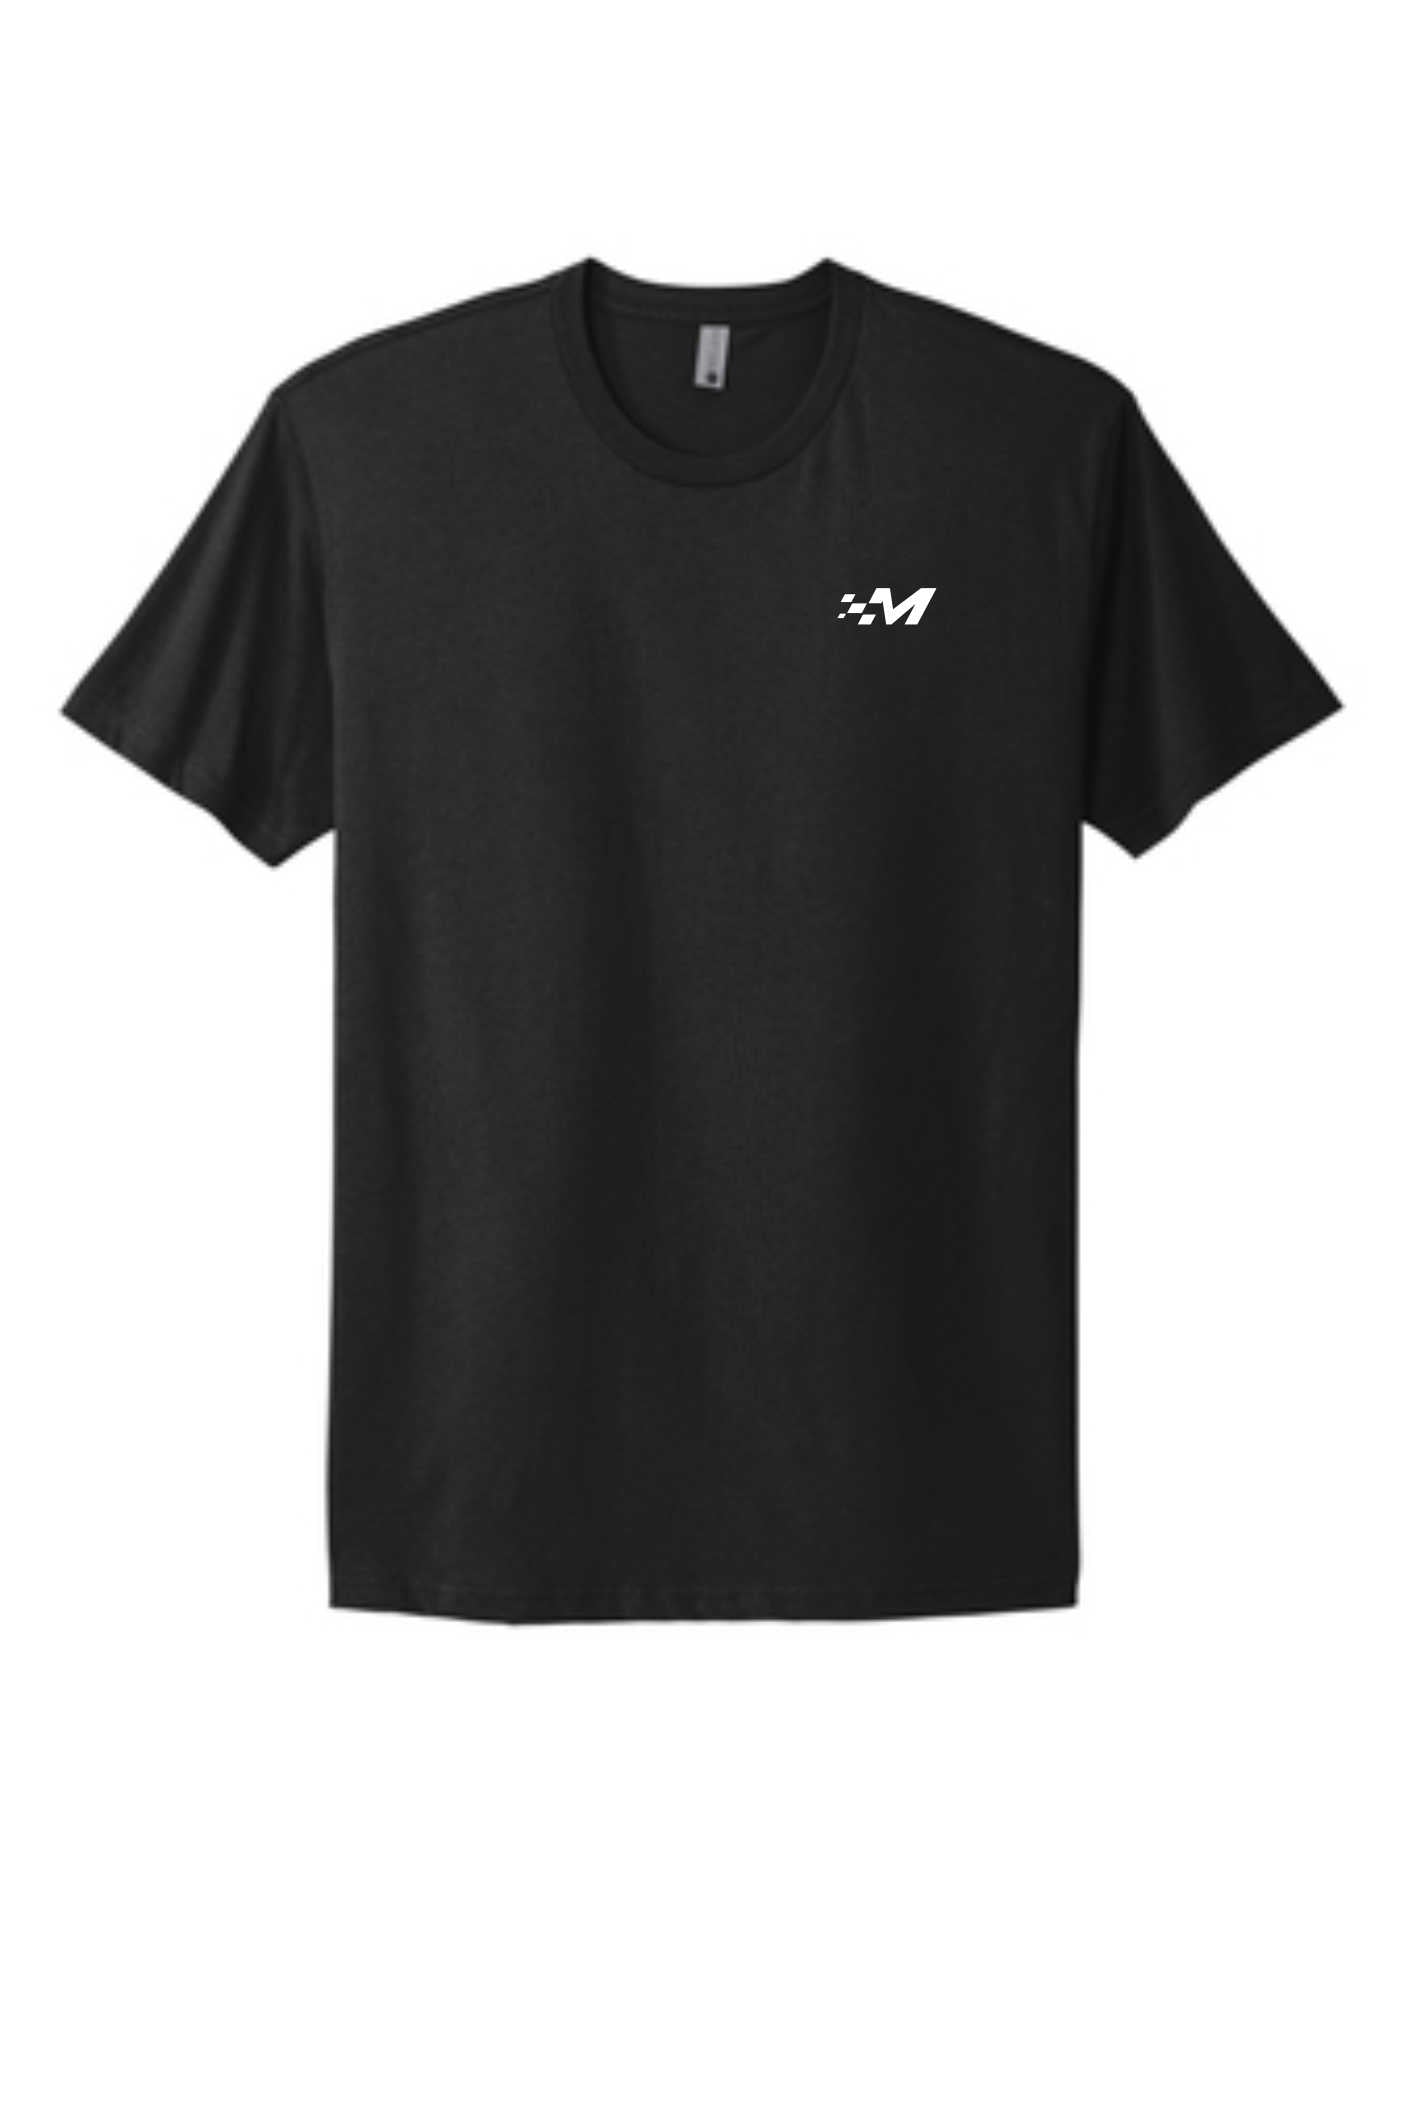 G81 M3 "Generations" 2023 Design - Short Sleeve T-Shirt - Black